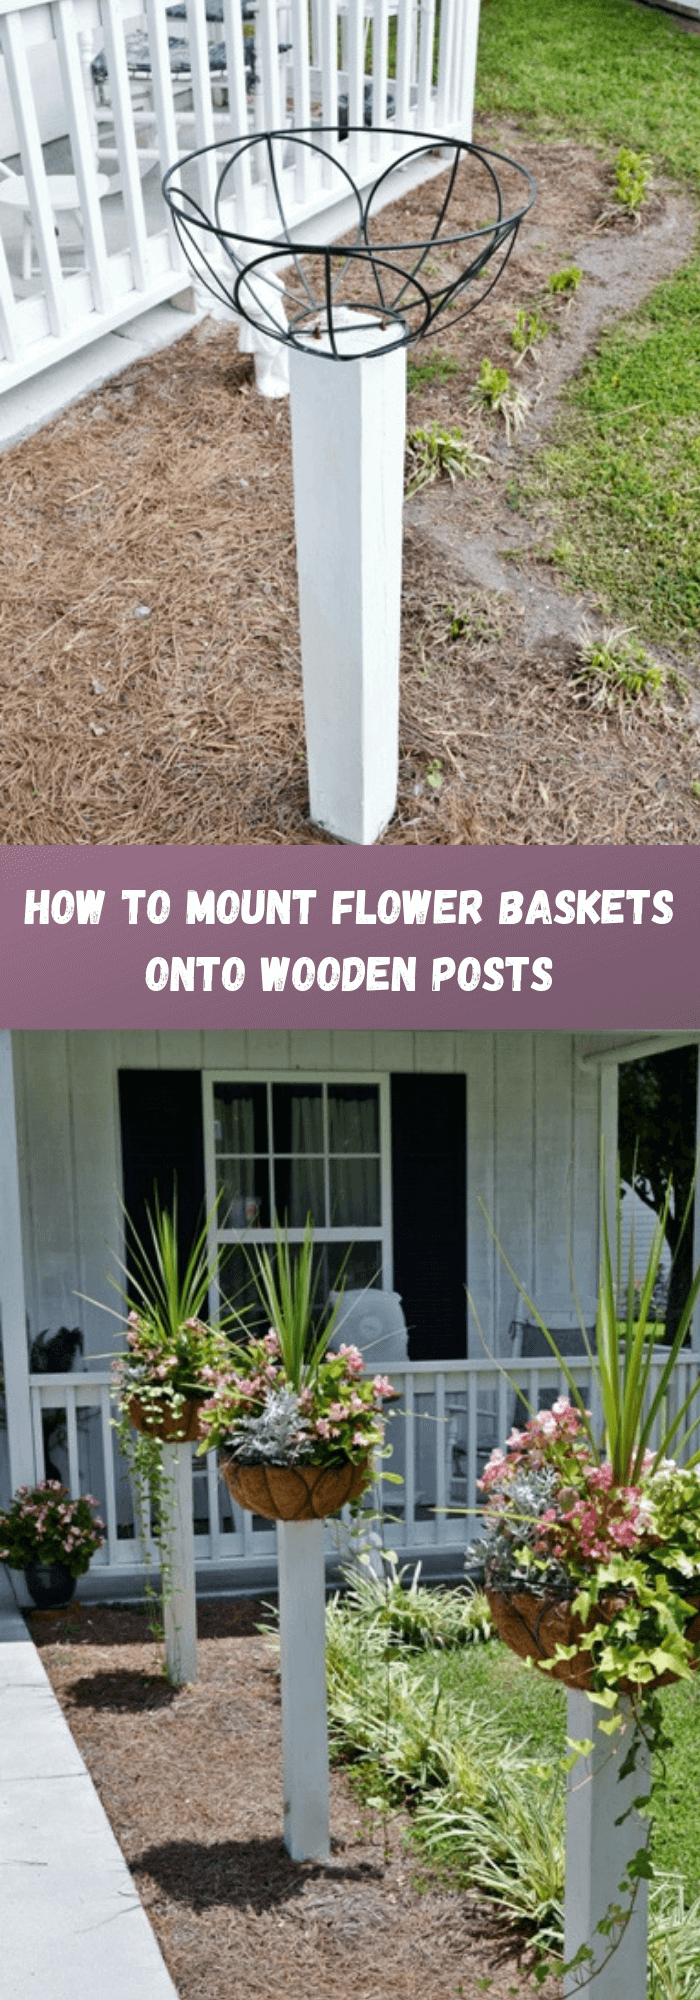 Mount Flower Baskets onto Wooden Posts